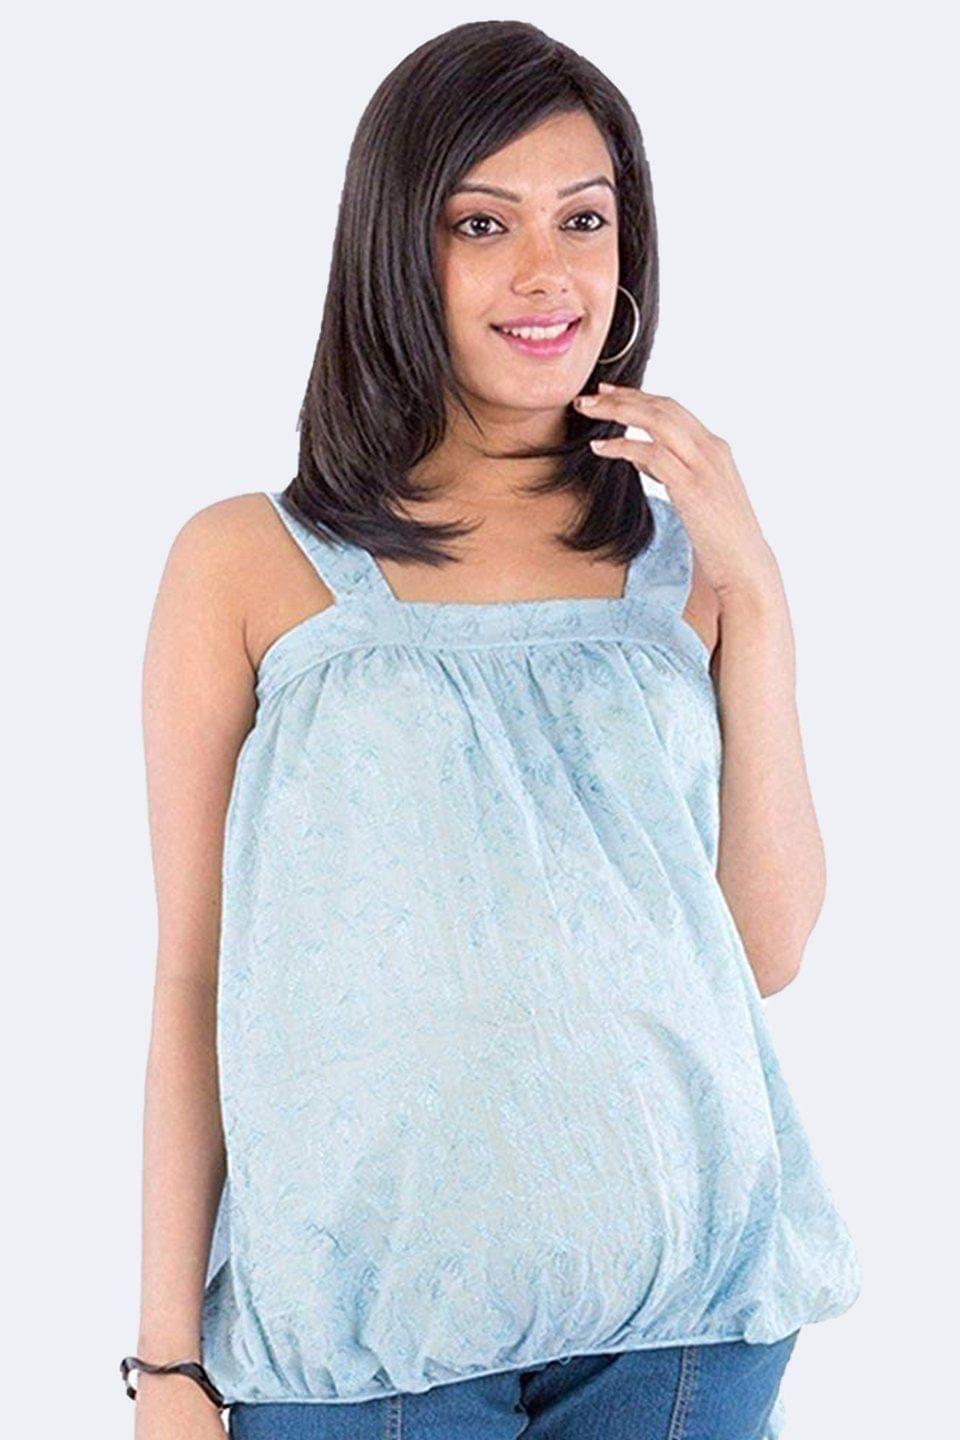 Morph Maternity Blue Maternity Top